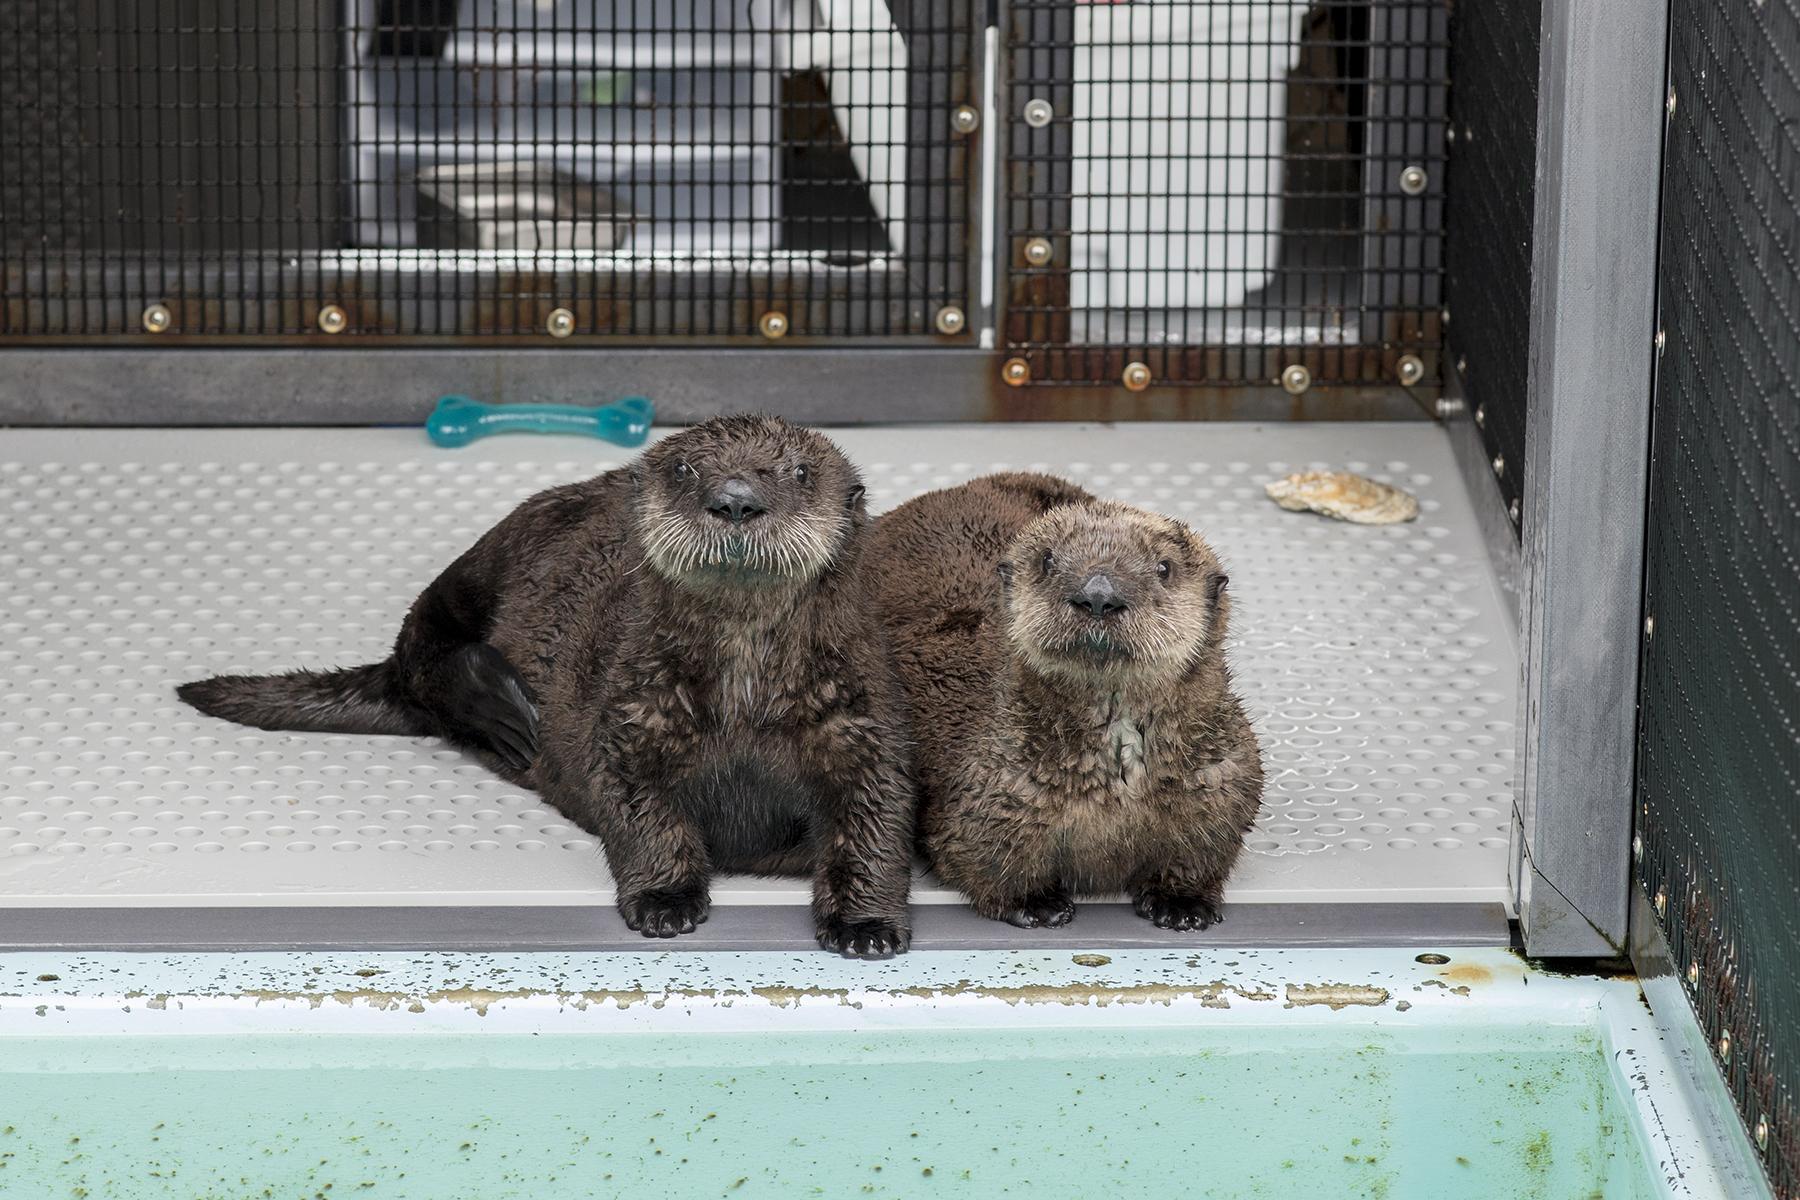 Two sea otter pups arrived at Shedd Aquarium on July 8, 2019, after being rescued in California. (Brenna Hernandez / Shedd Aquarium) 